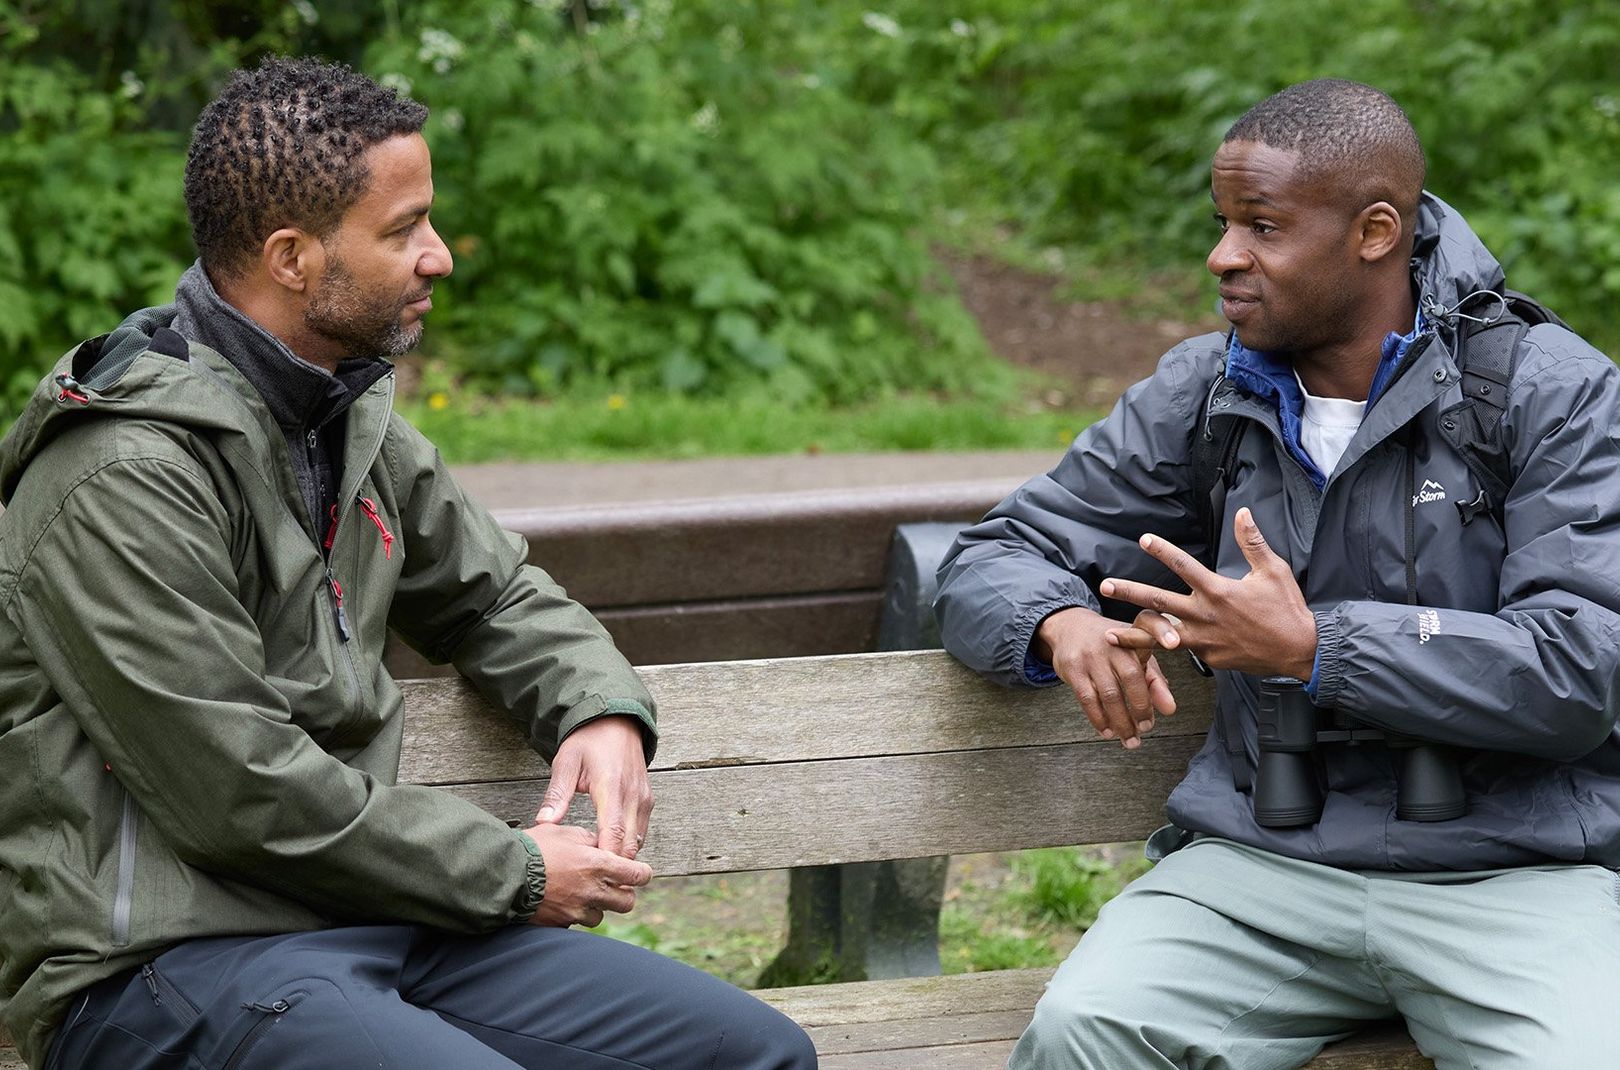 Sean Fletcher and Ollie Olanipekun sitting on a bench talking